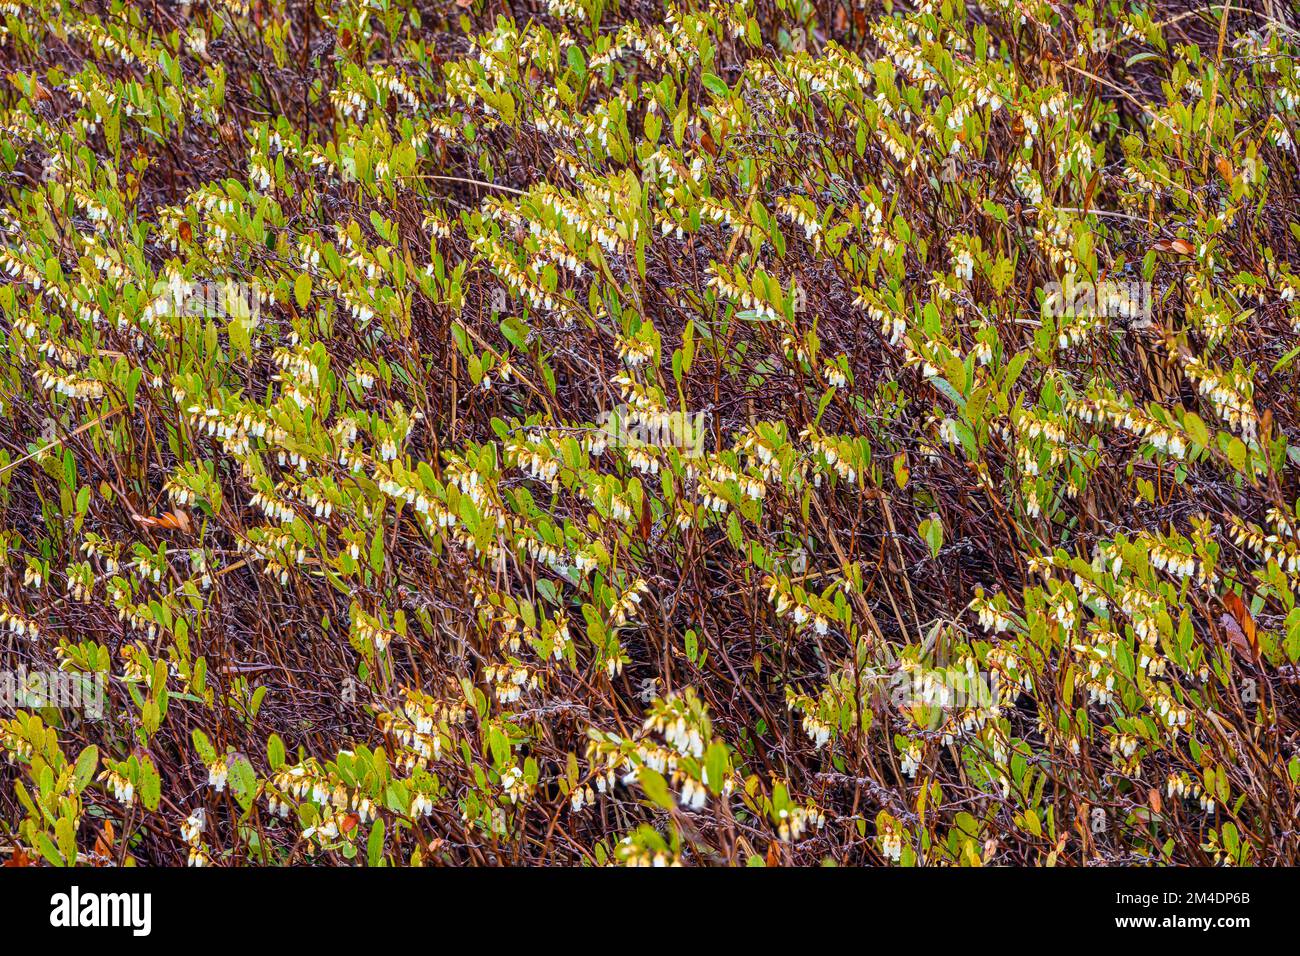 Leatherleaf shrubs in bloom in early spring, Greater Sudbury, Ontario, Canada Stock Photo